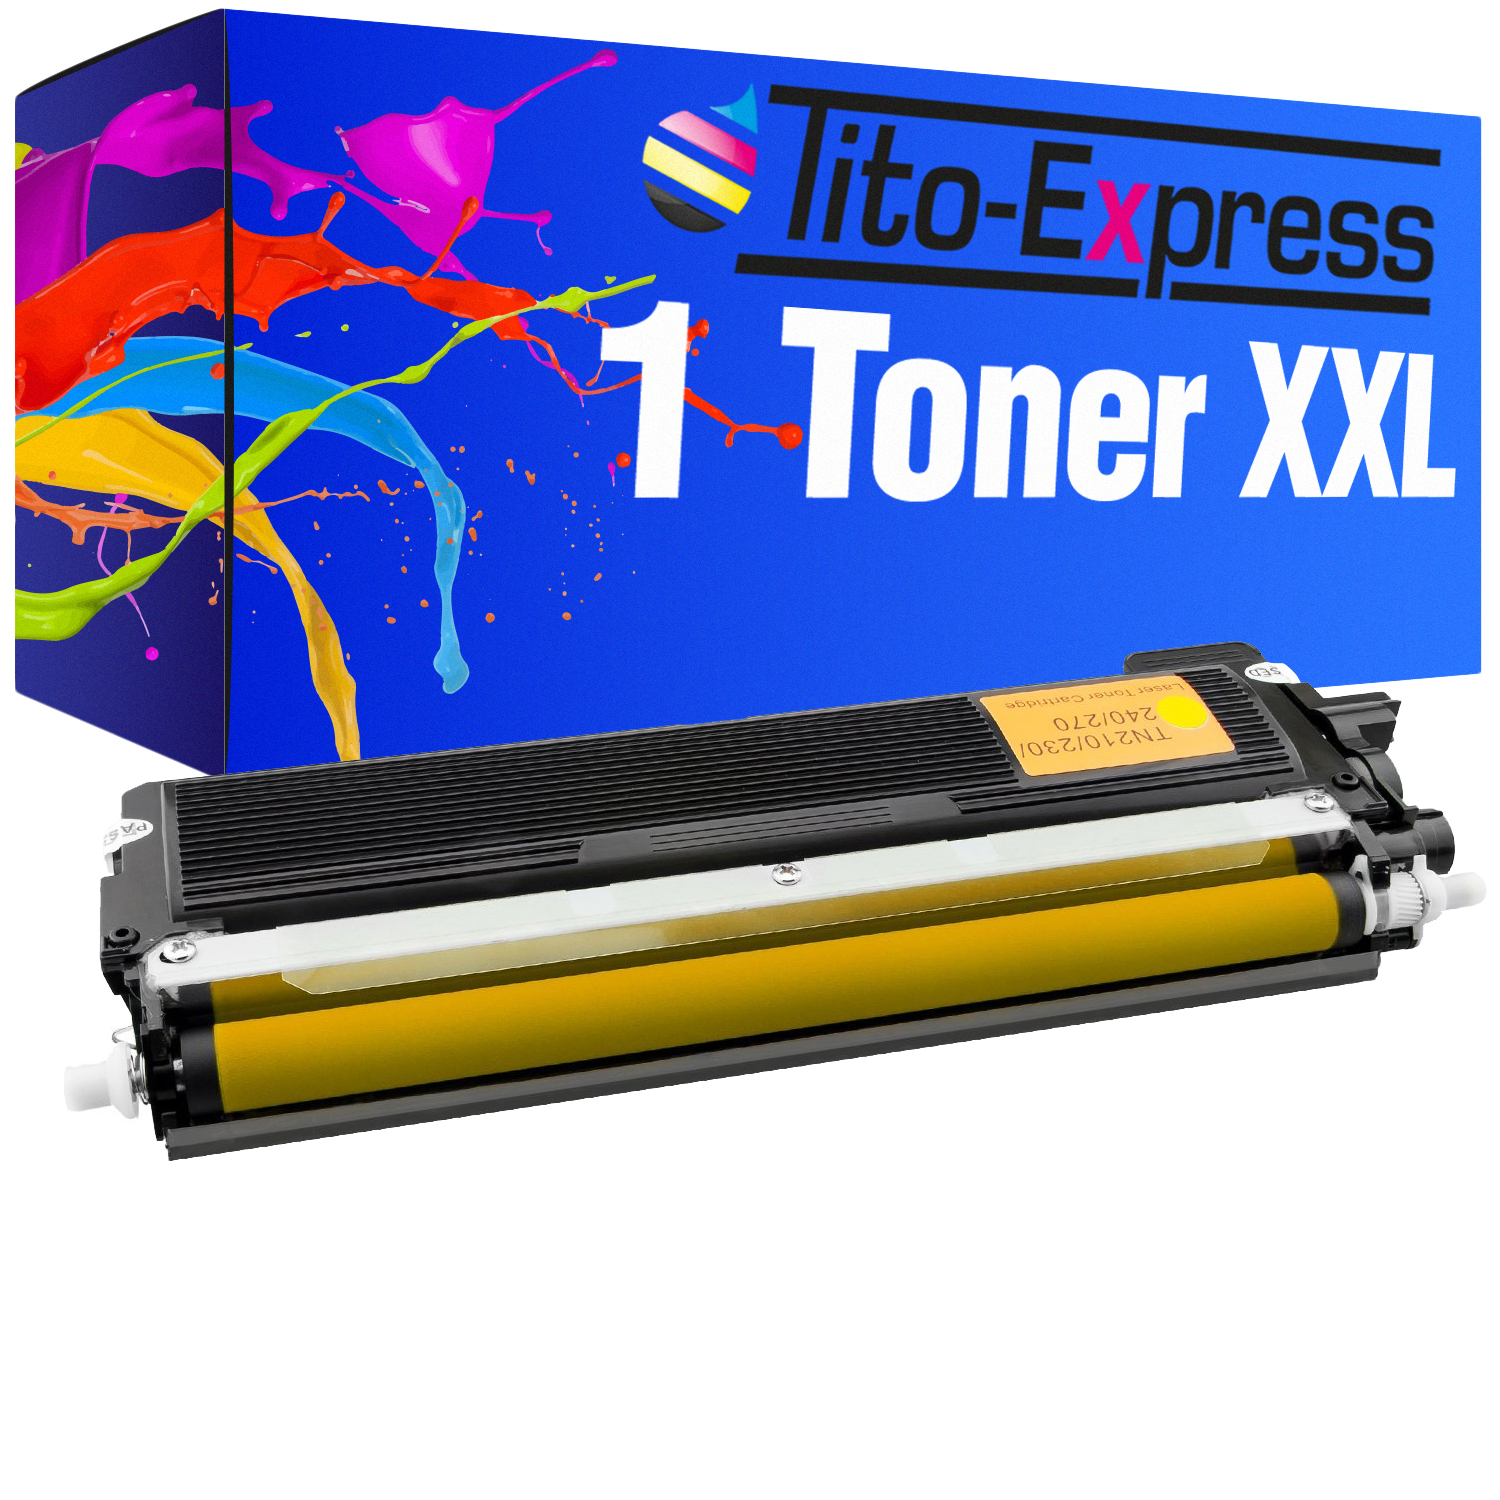 TITO-EXPRESS PLATINUMSERIE 1 (TN230) Brother Toner XXL TN-230 yellow ersetzt Toner